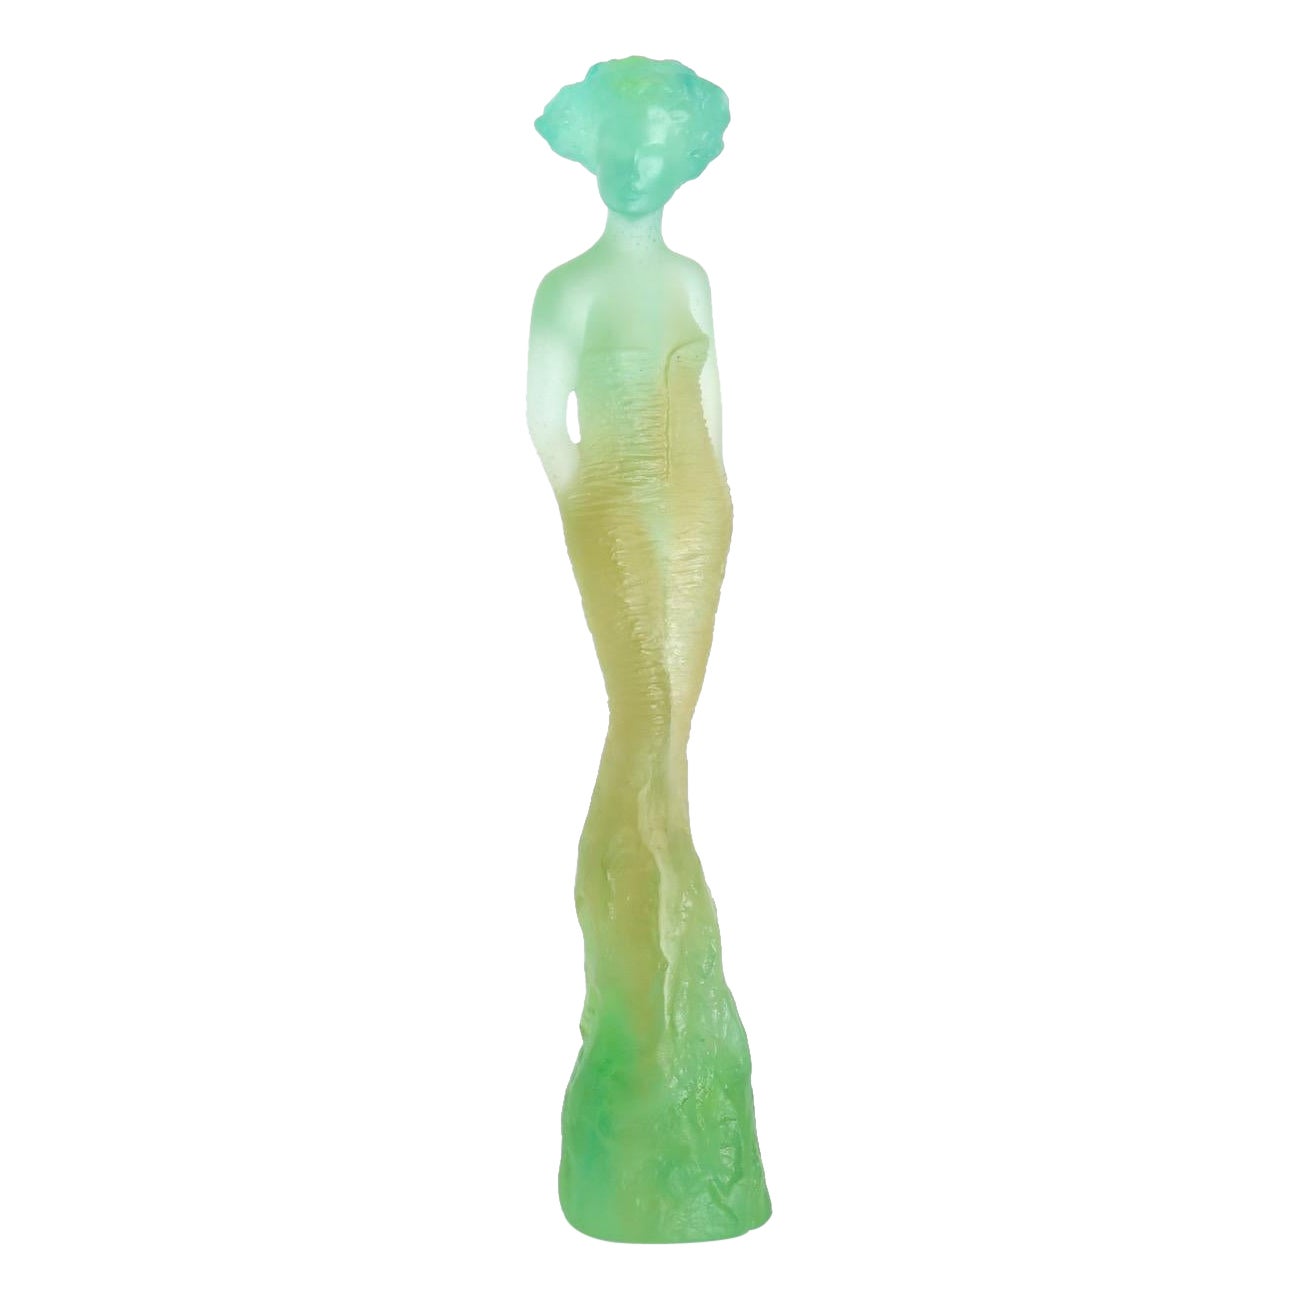 Daum "Eleonore" Pate de Verre Crystal Sculpture Limited Edition 122 of 425 For Sale